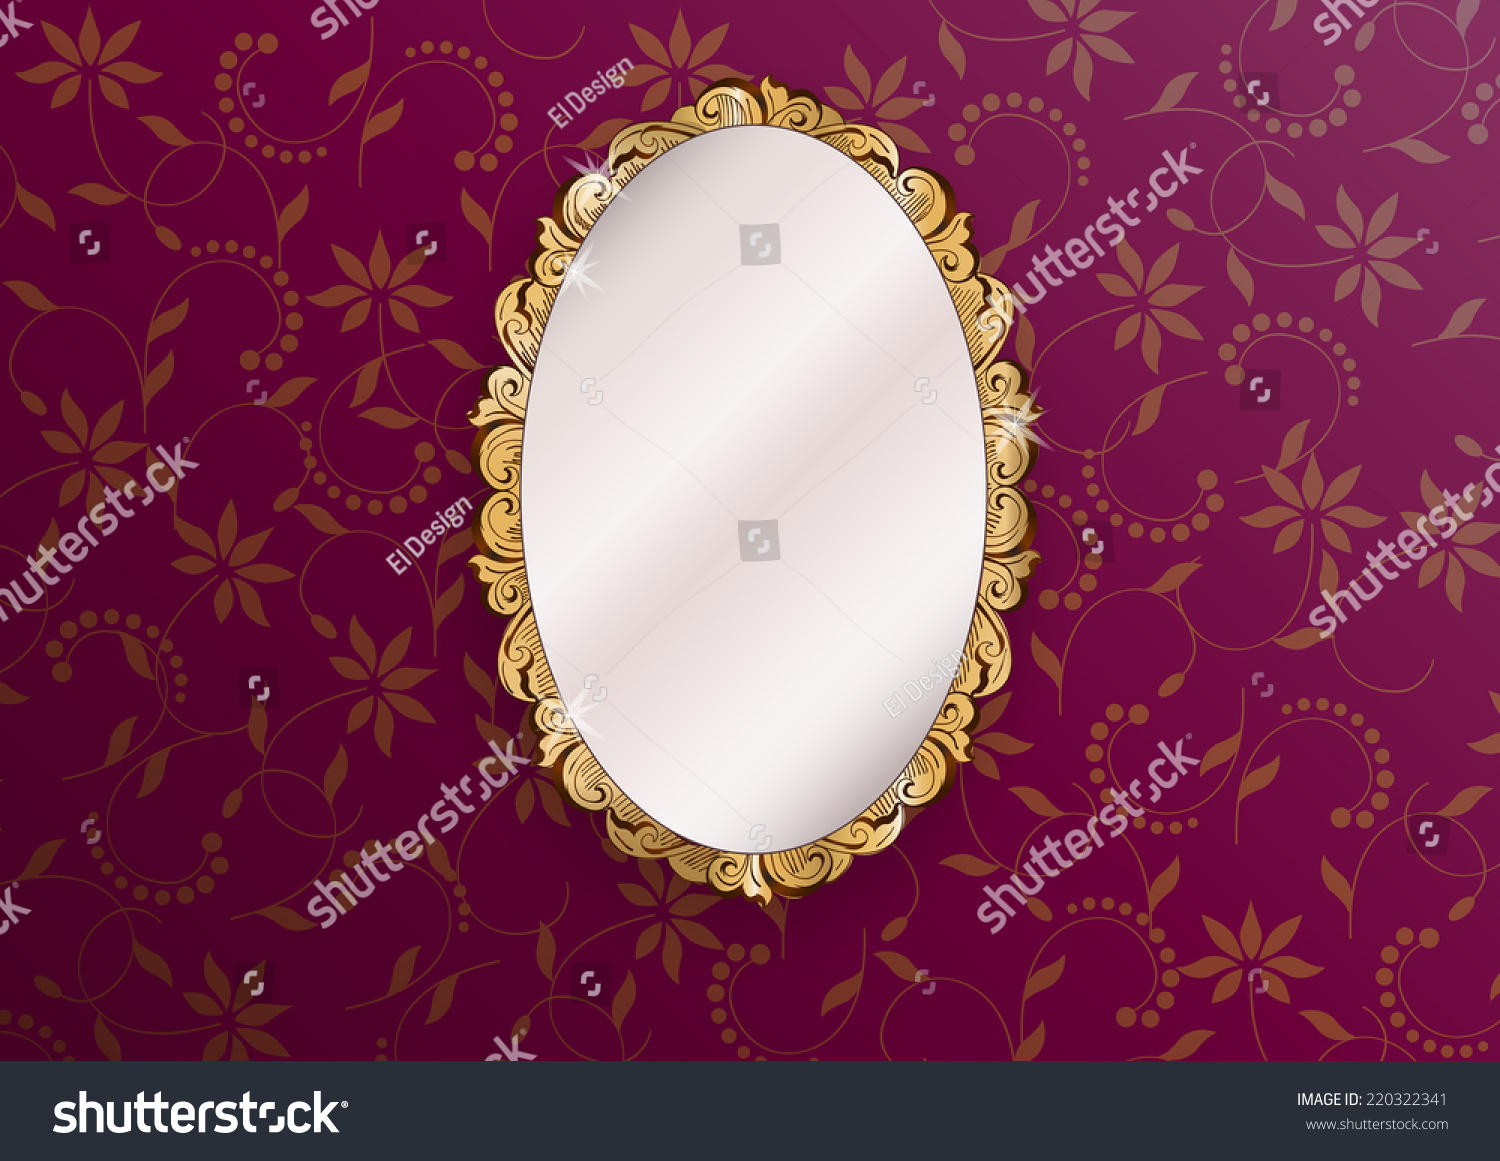 Gold Ornate Vintage Mirror Vector Illustration Stock Vector 220322341 ...